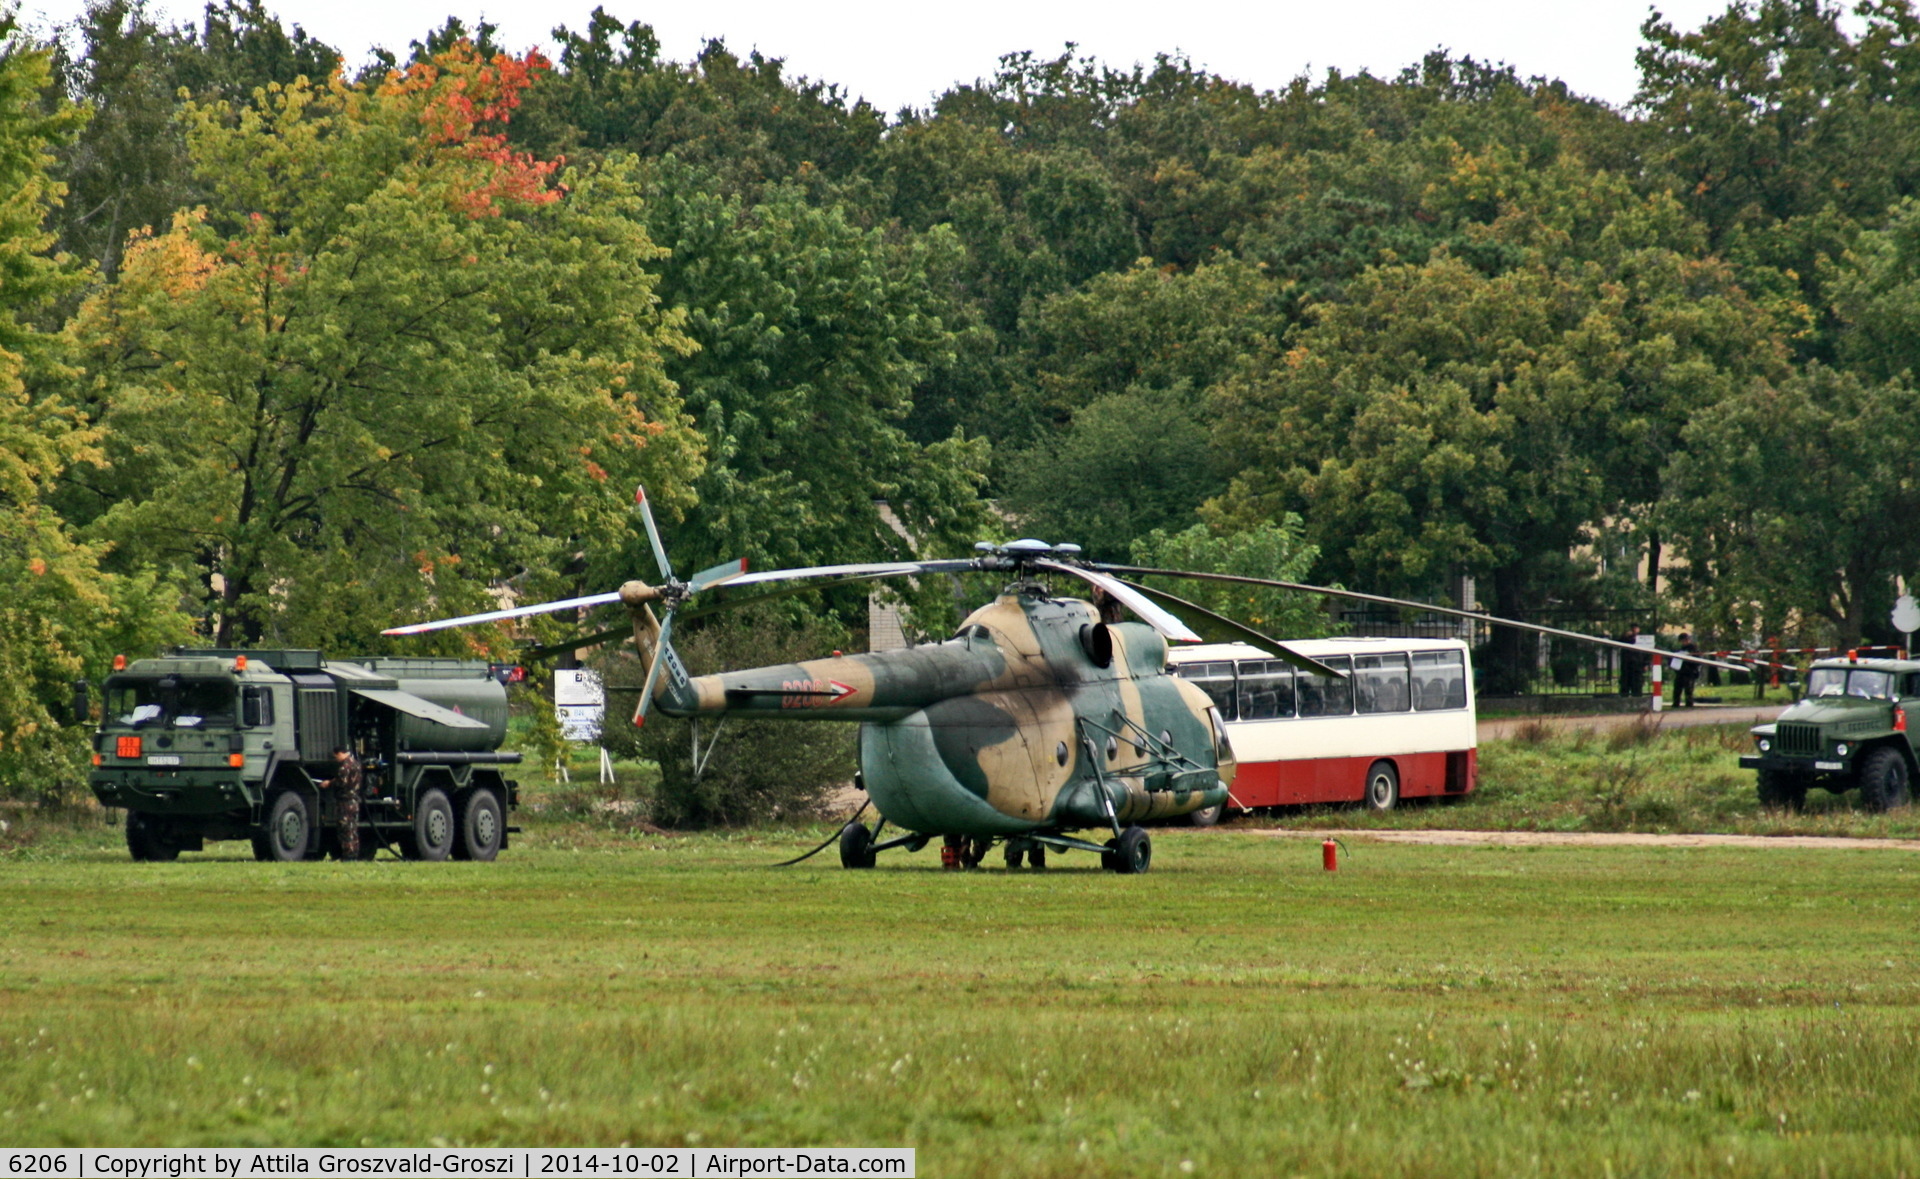 6206, 1979 Mil Mi-8T Hip C/N 226206, Veszprém-Jutas újmajor, Hungarian airforce training base